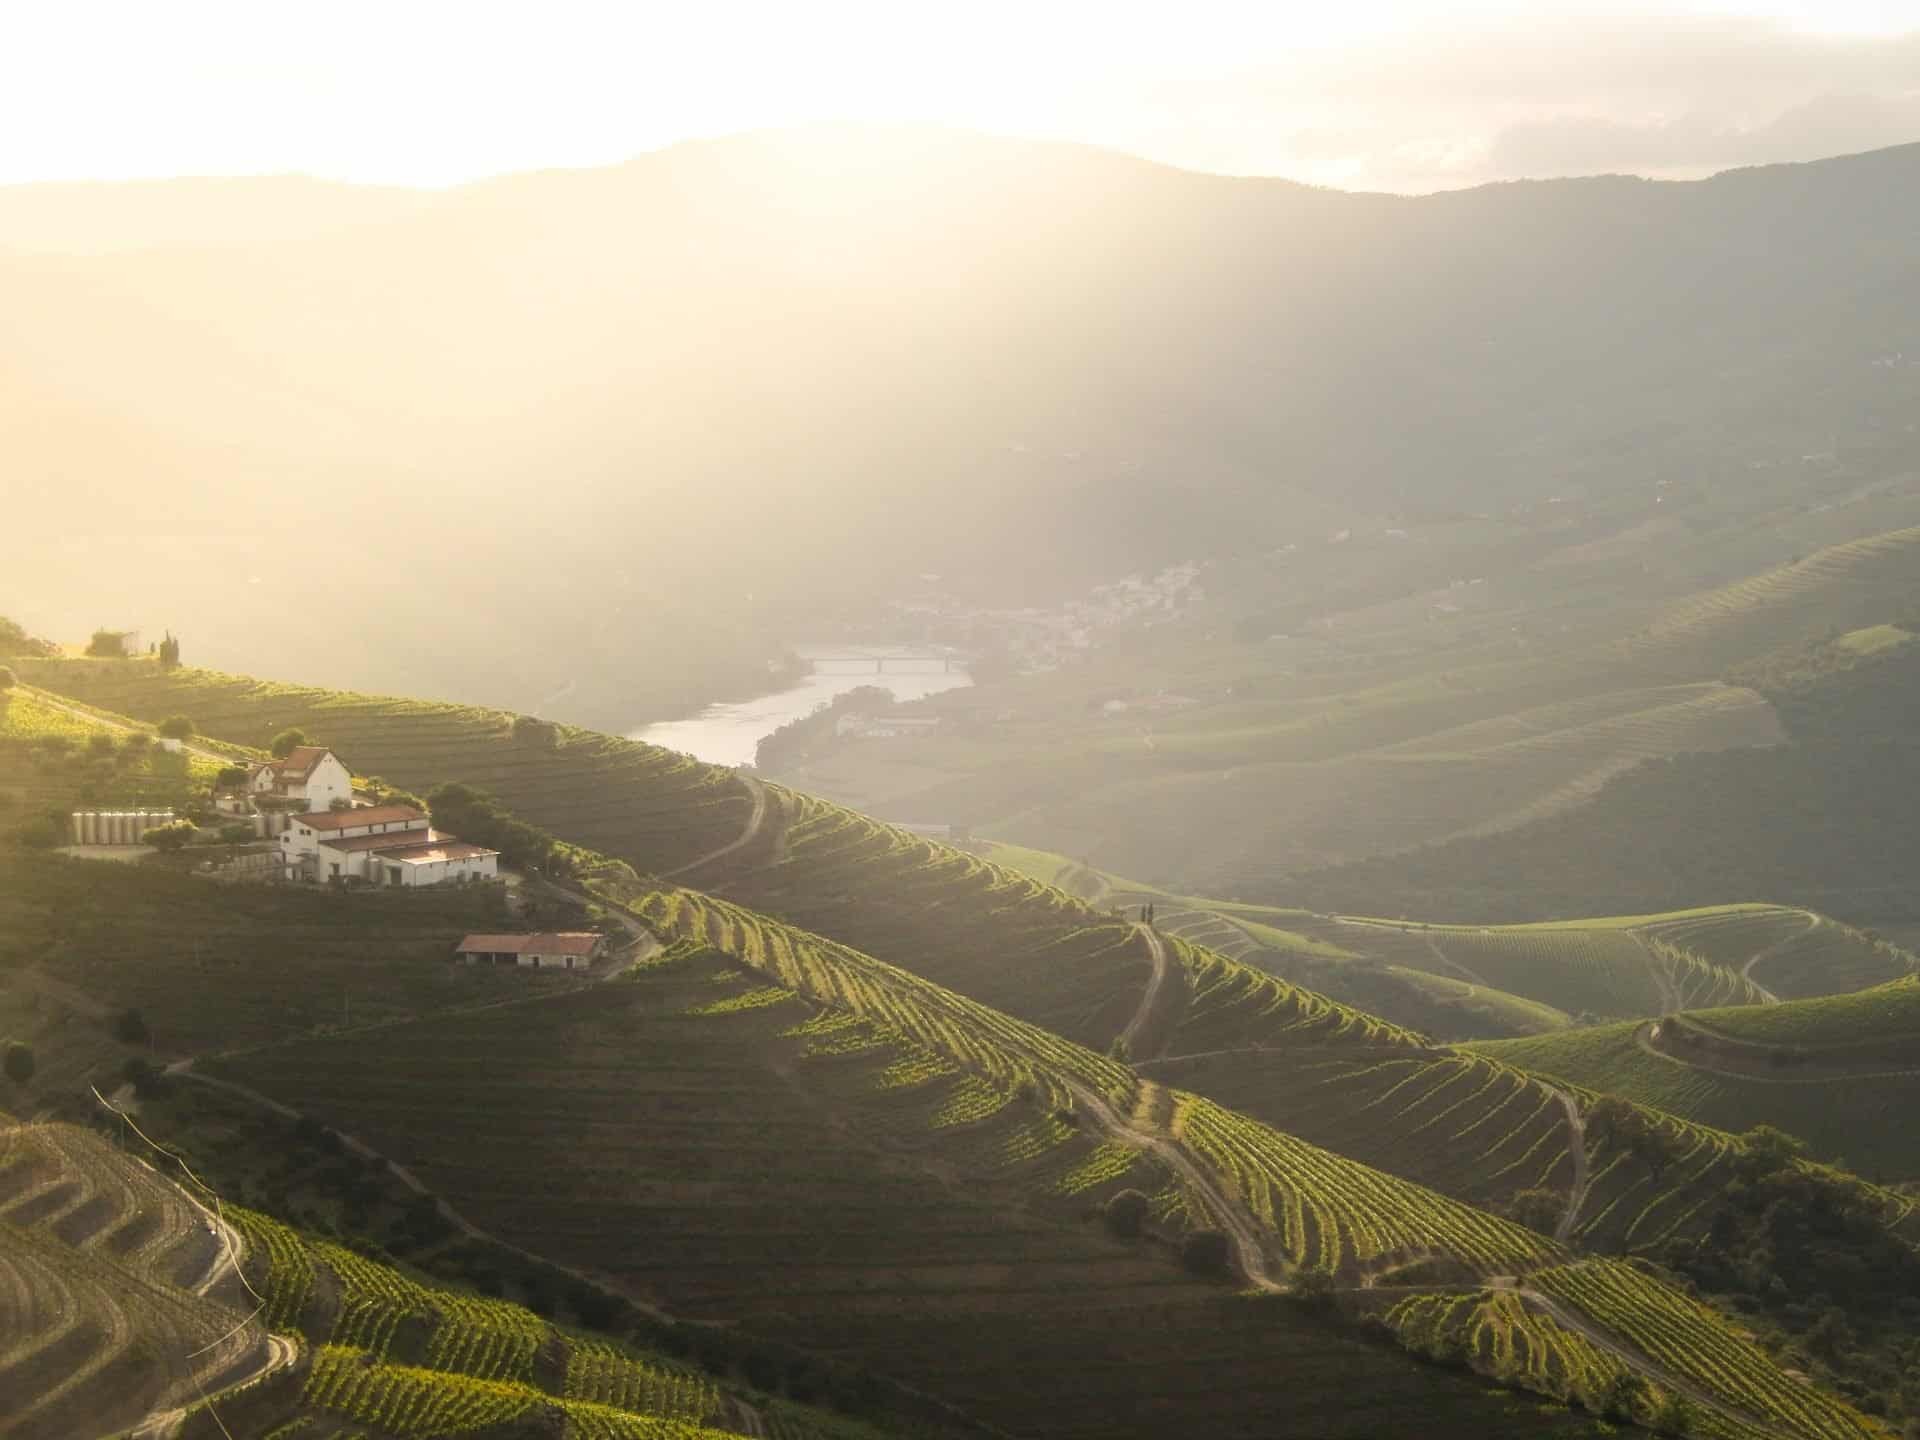 Touring Douro Wine Country